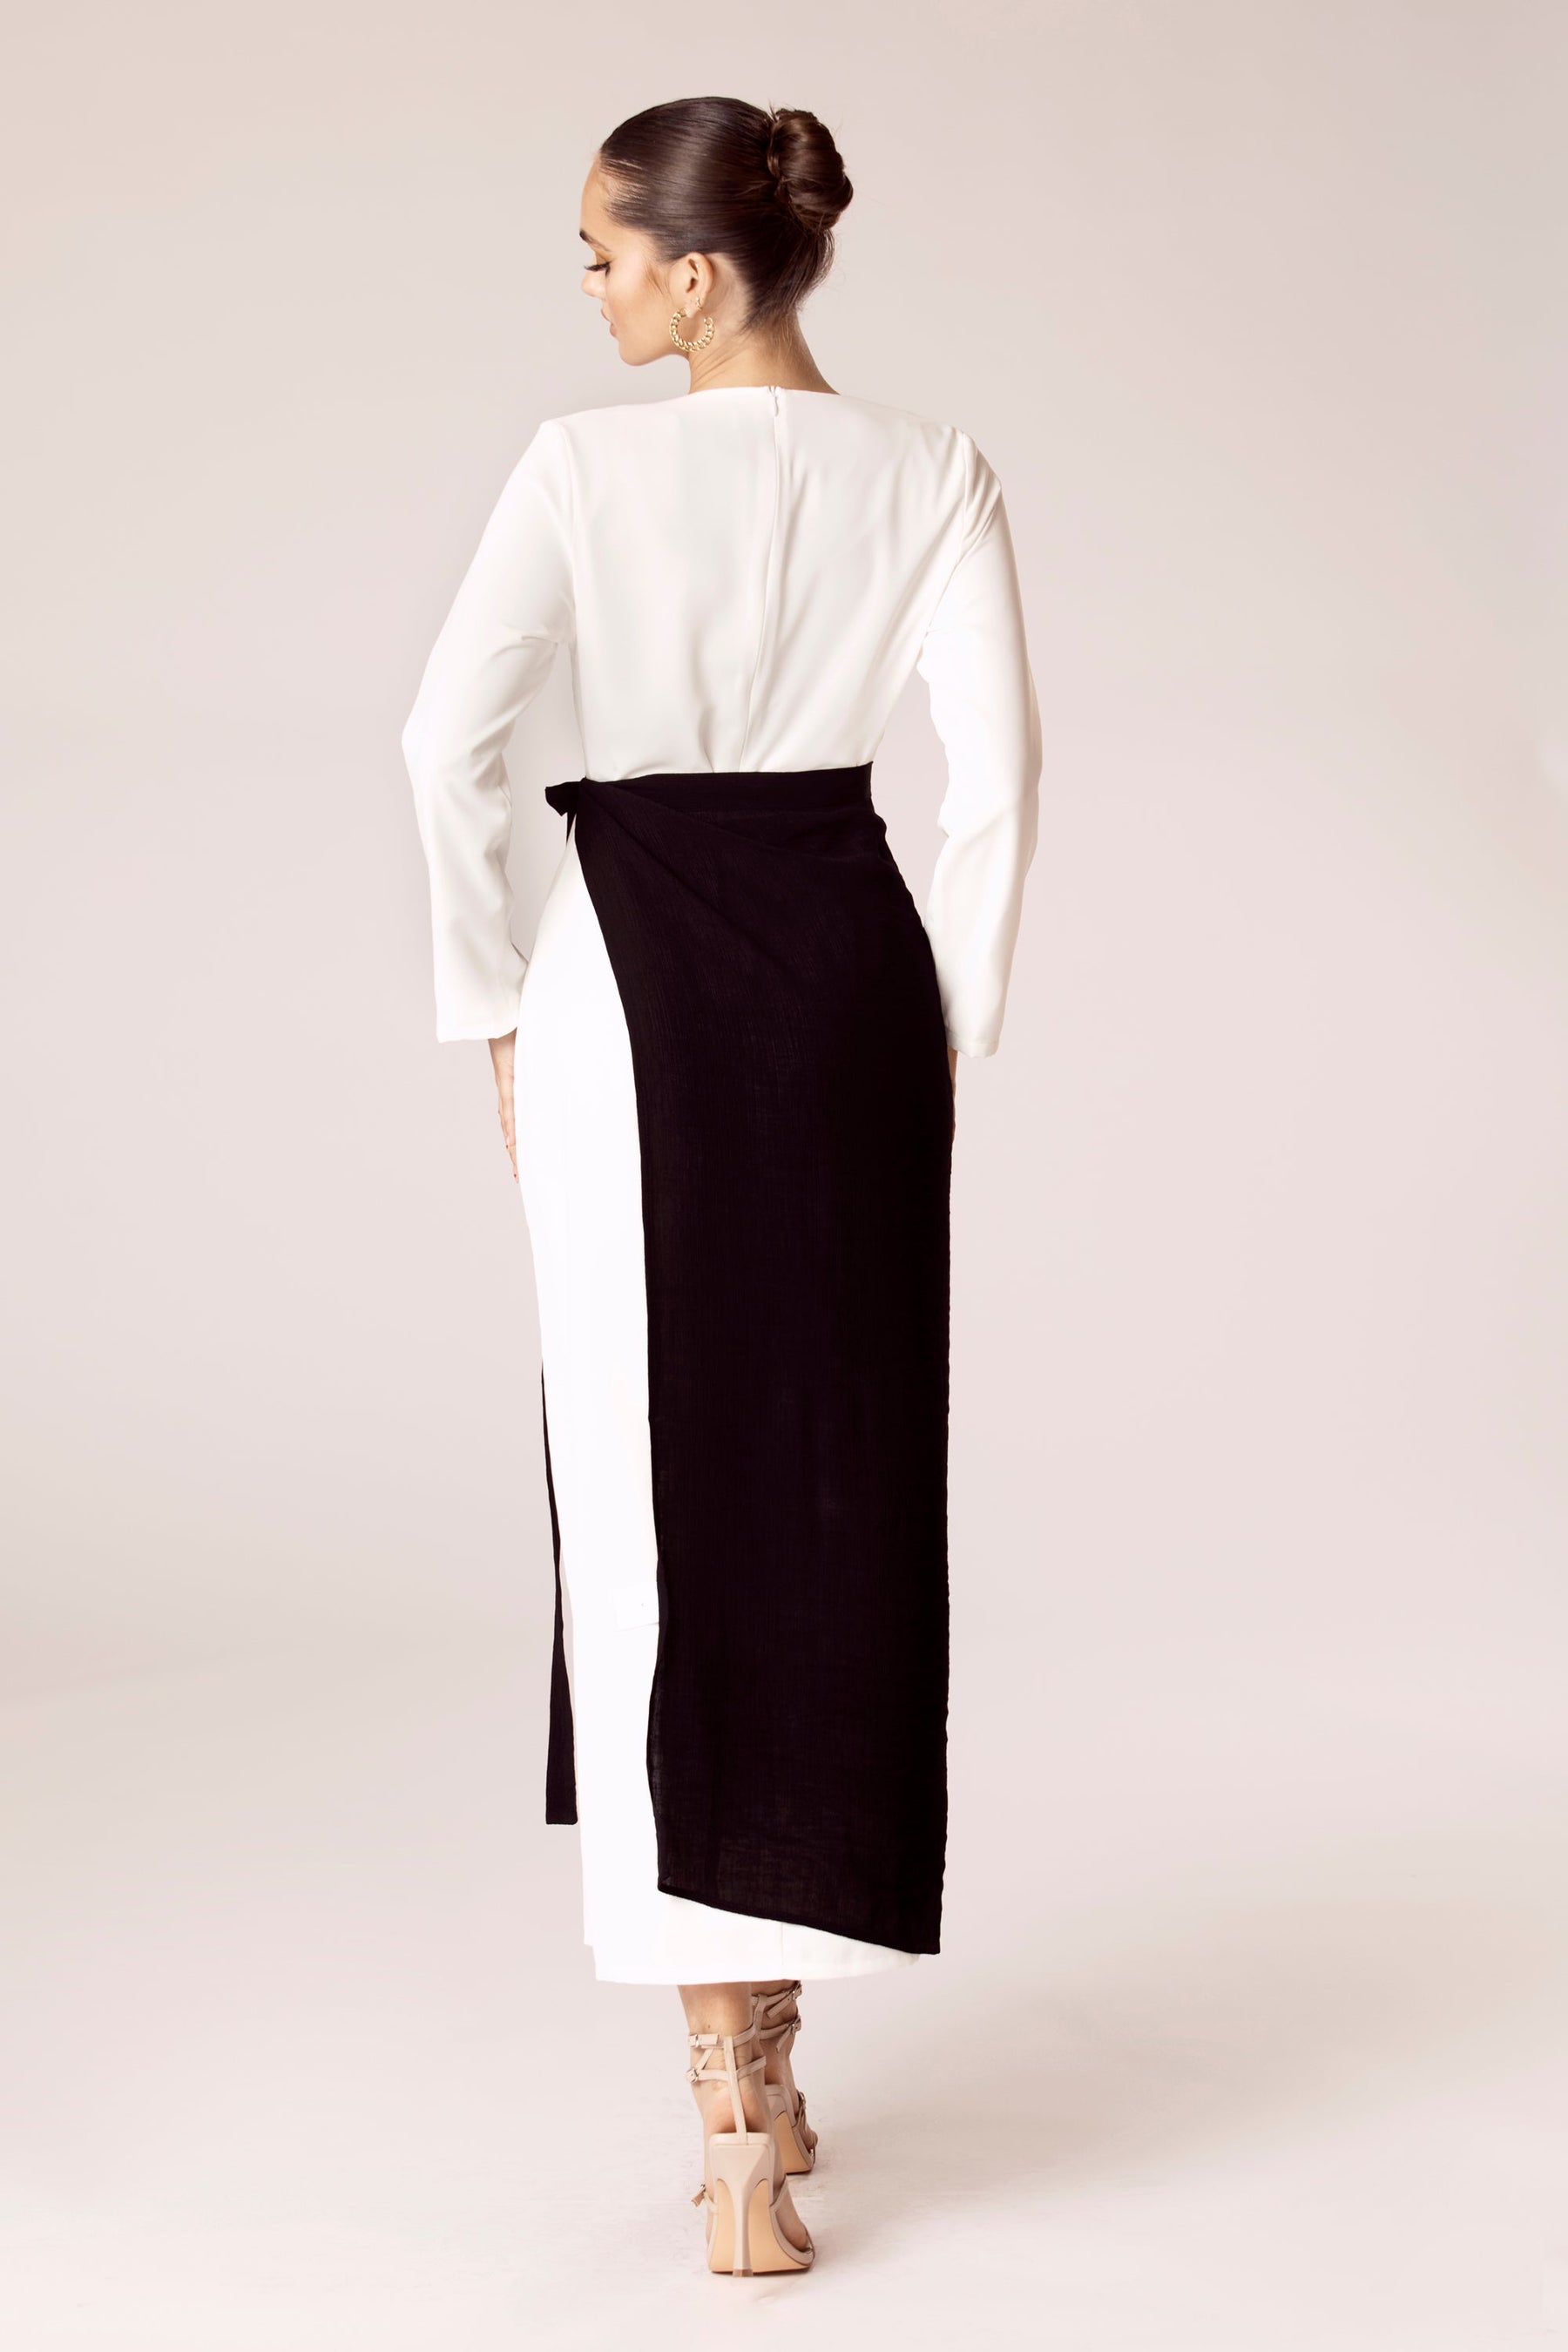 Rana Textured Overlay Tie Skirt - Black epschoolboard 